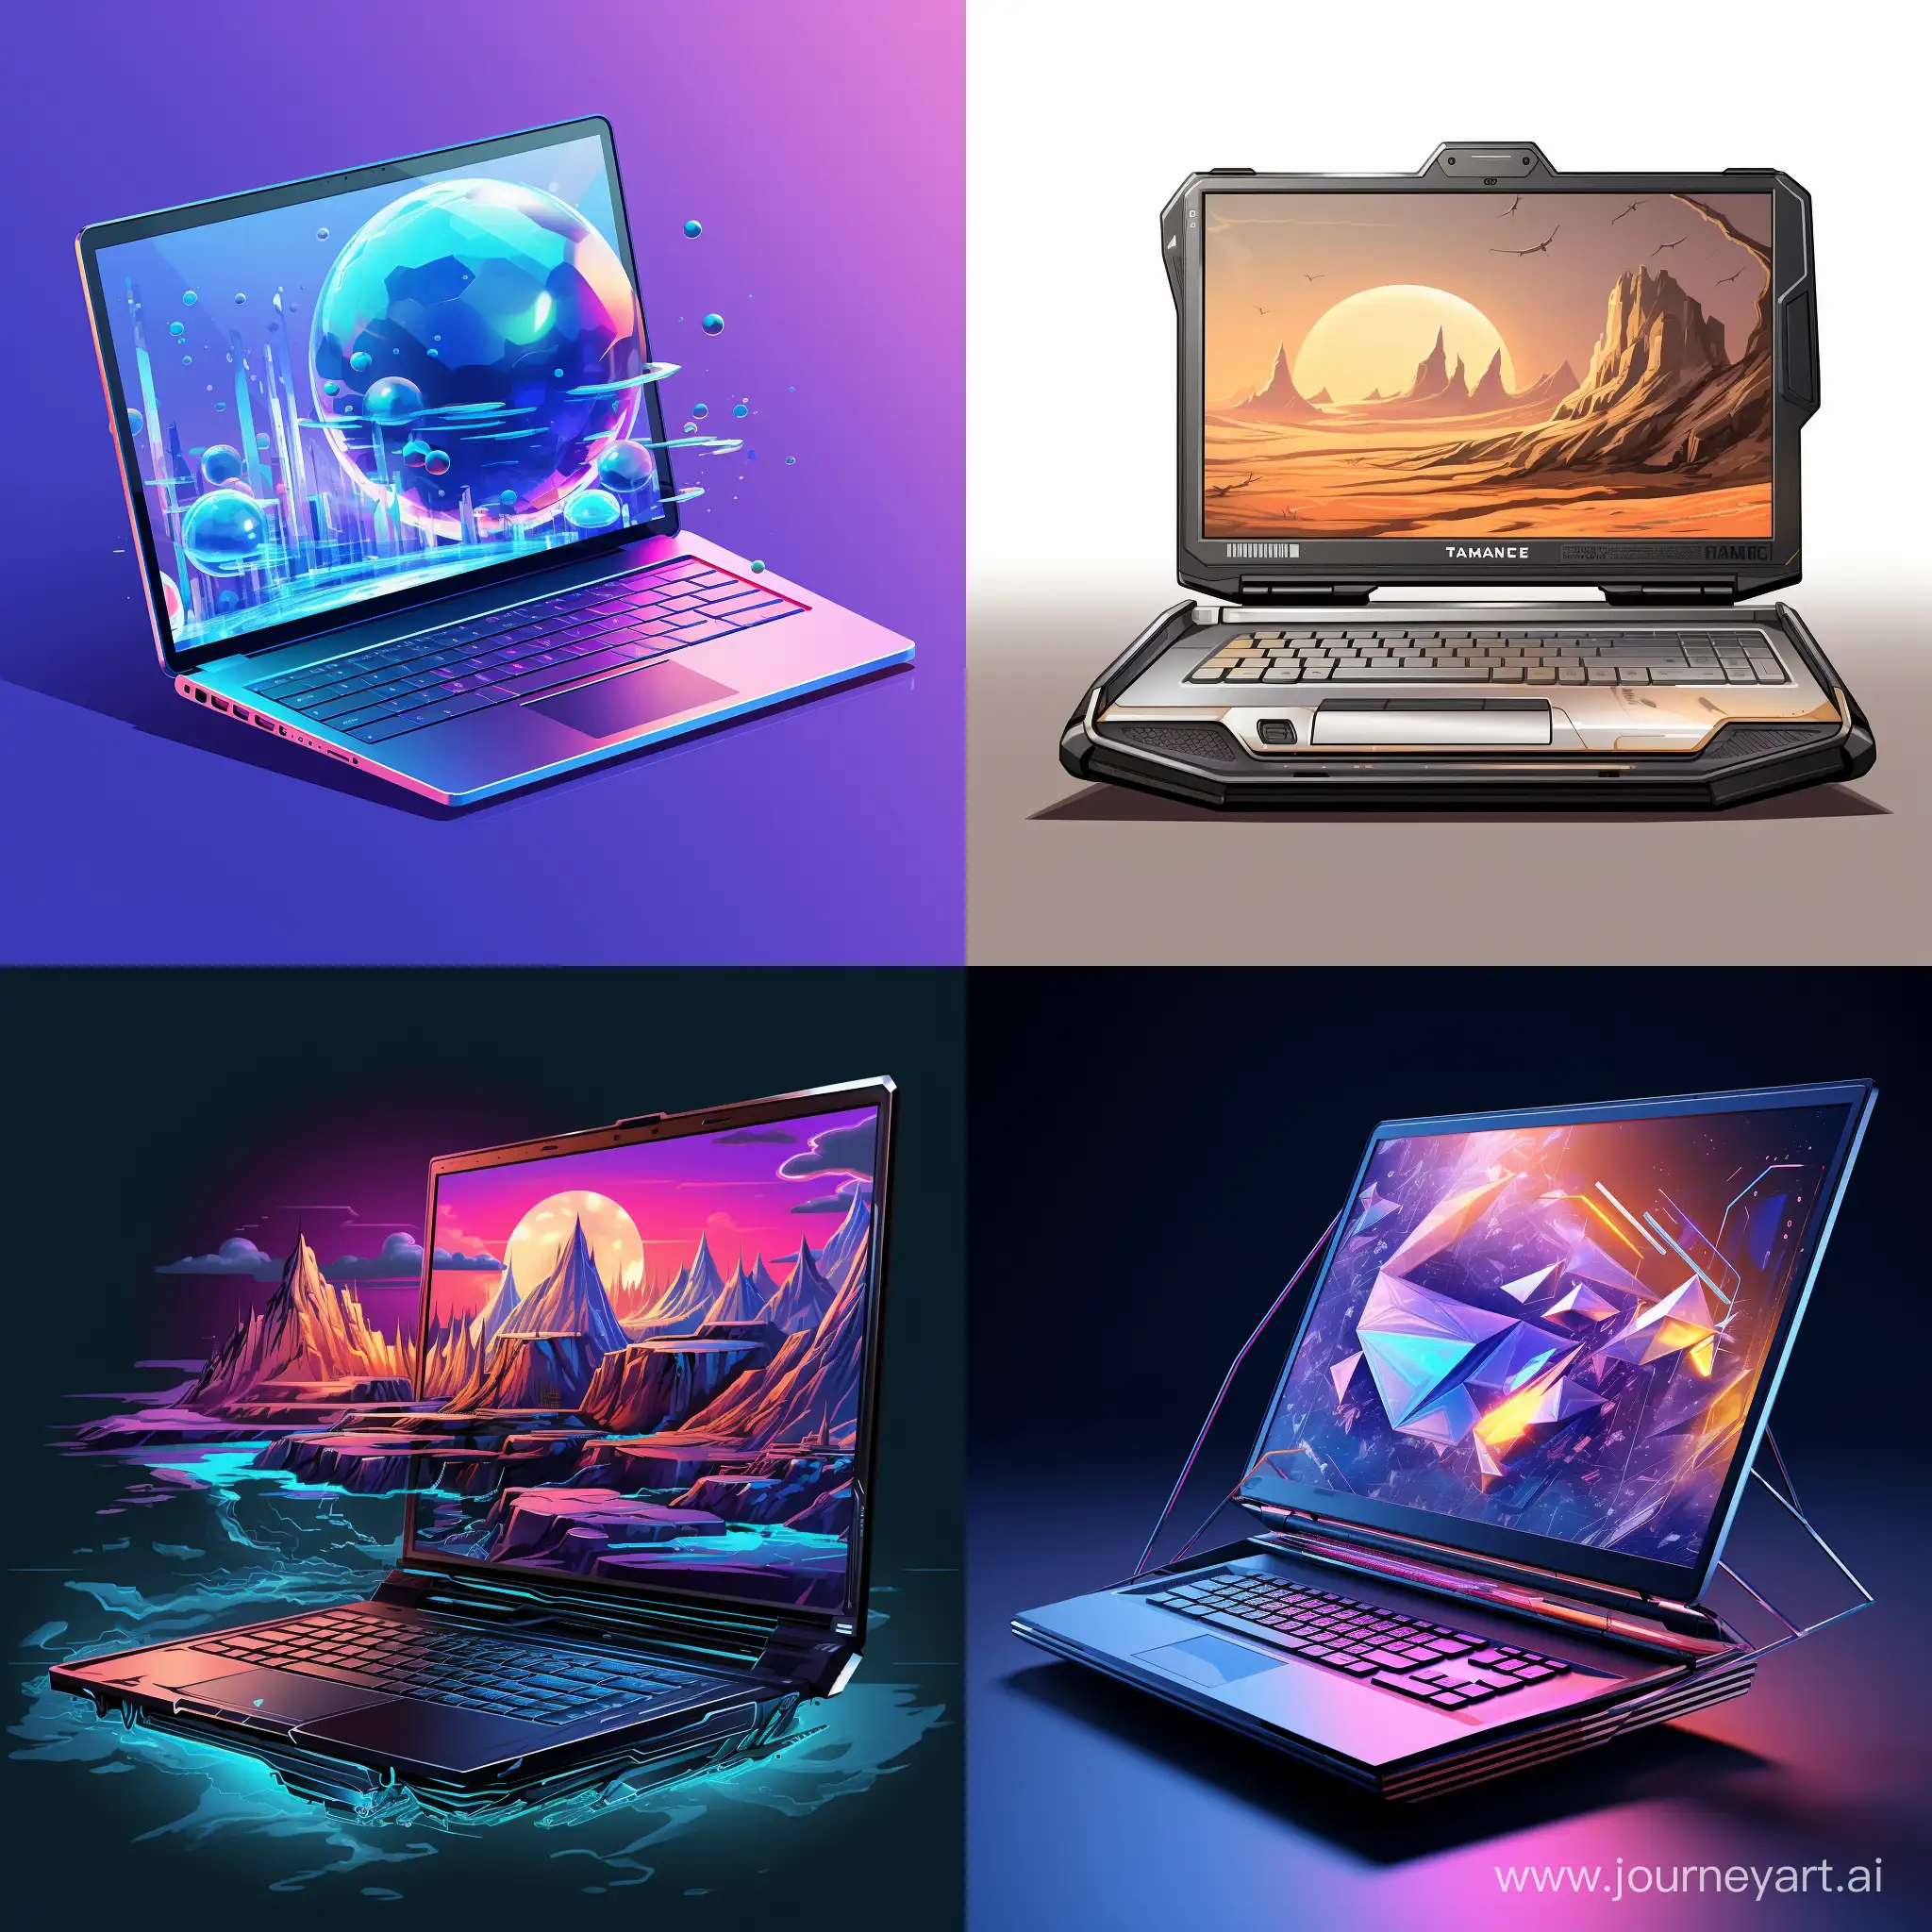 Futuristic-Laptop-Illustration-with-CuttingEdge-Design-and-Technology